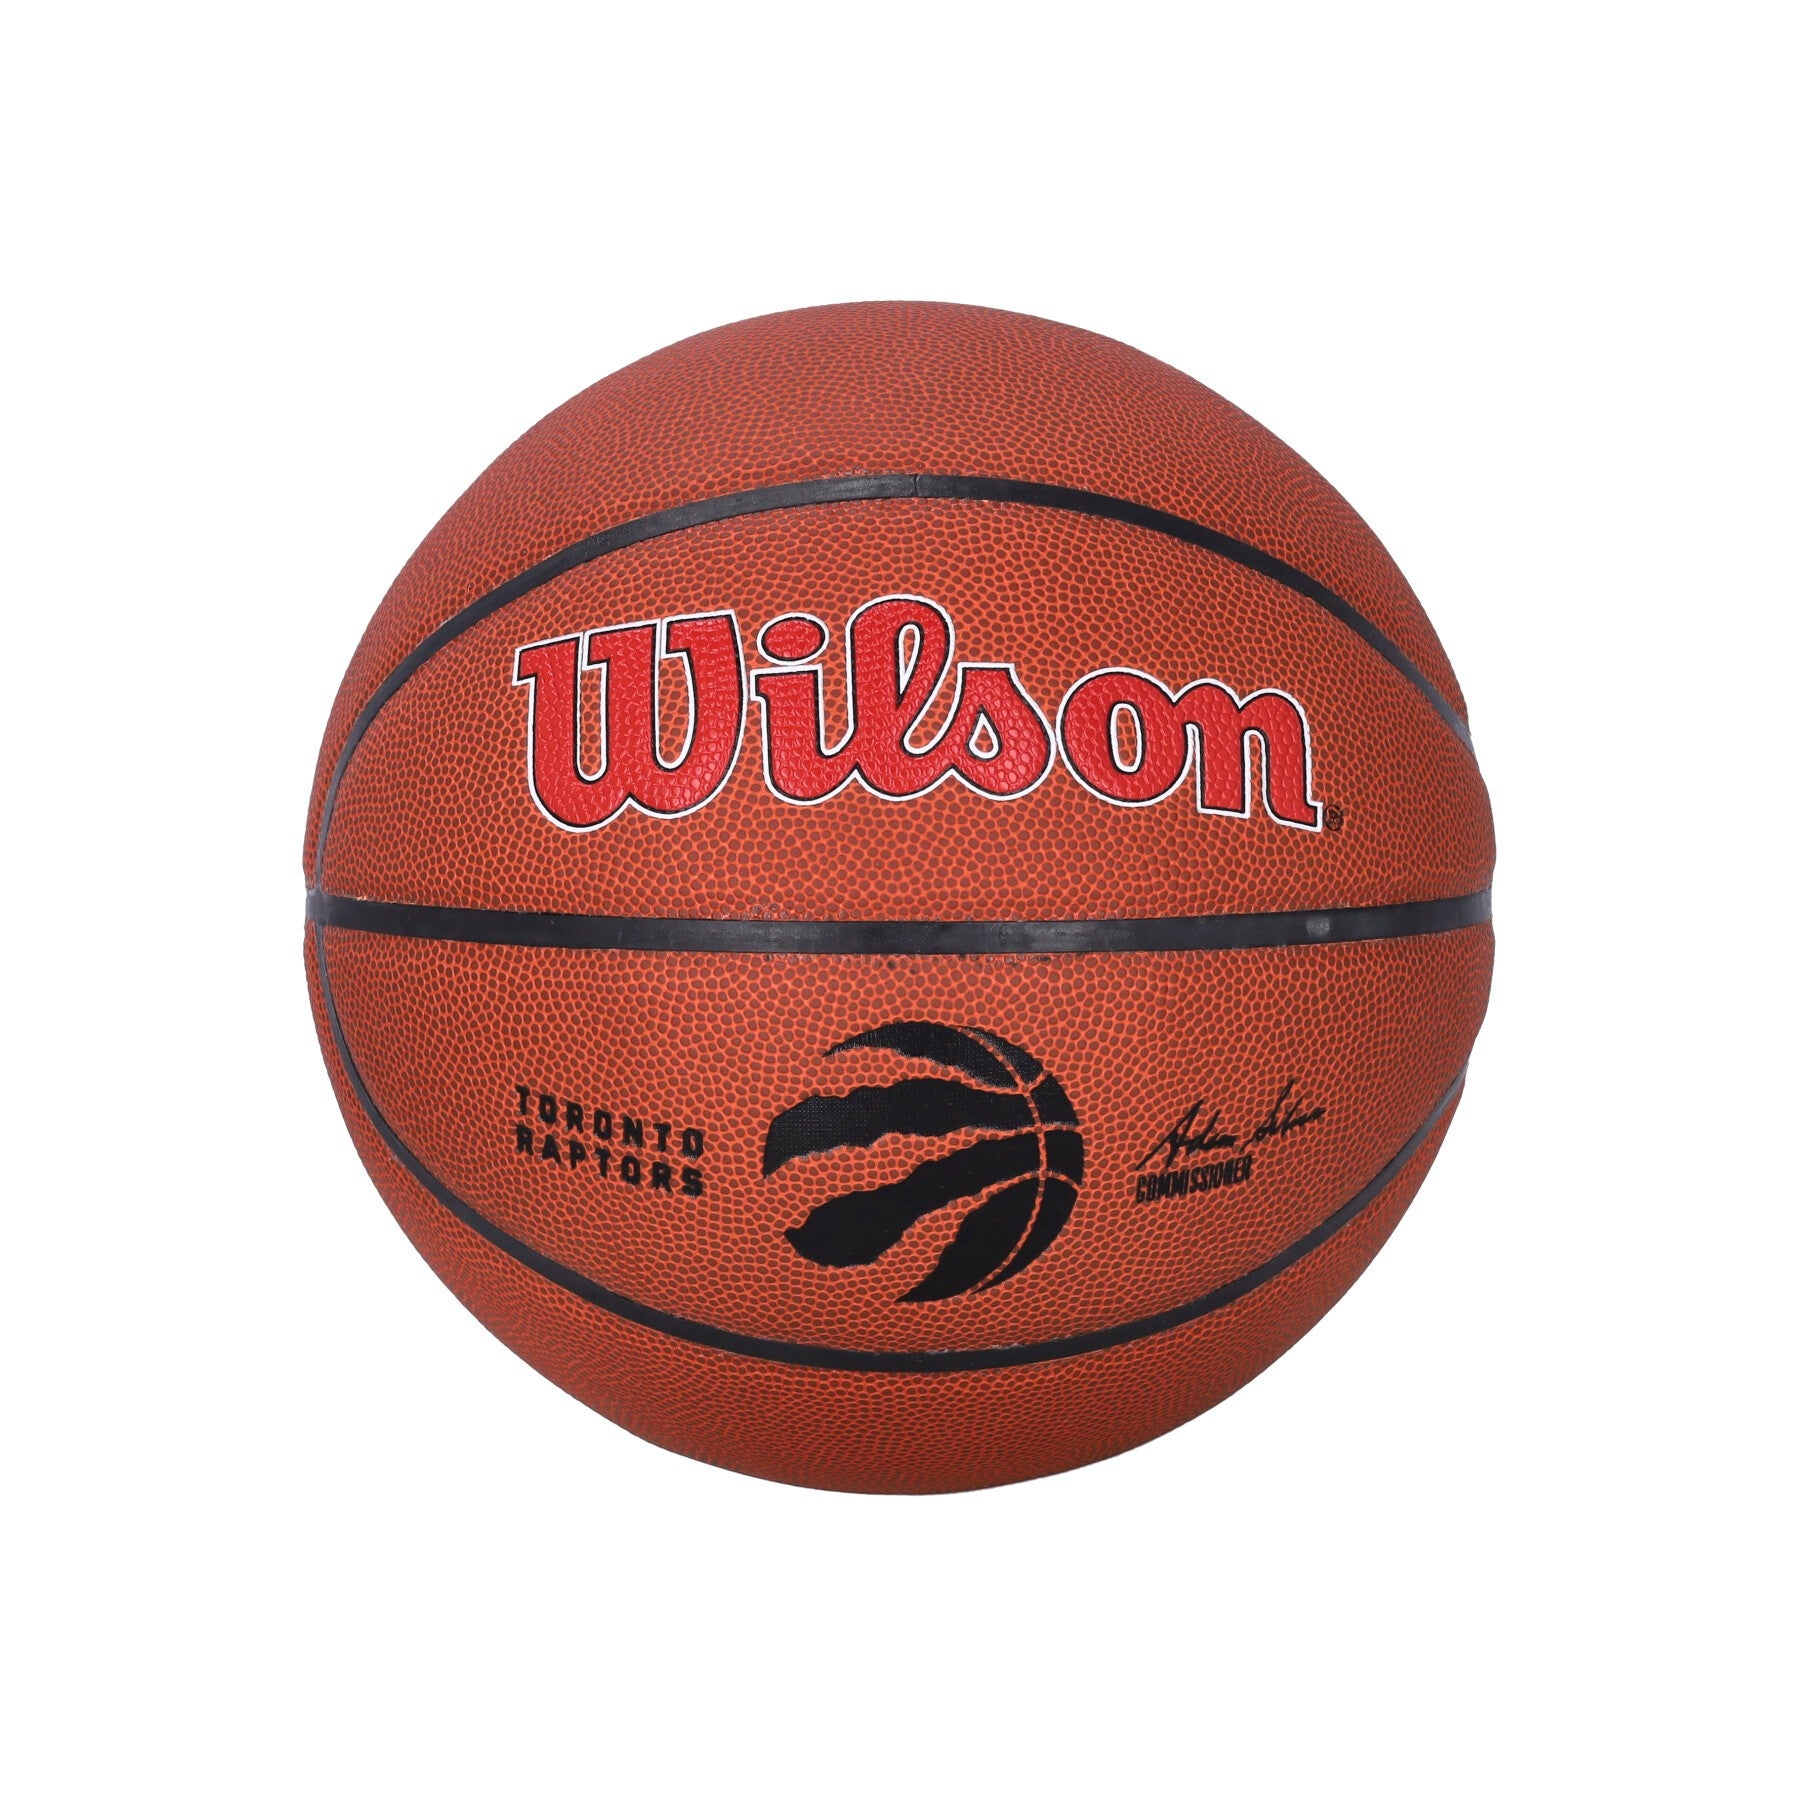 Wilson Team, Pallone Uomo Nba Team Alliance Basketball Size 7 Torrap, Brown/original Team Colors